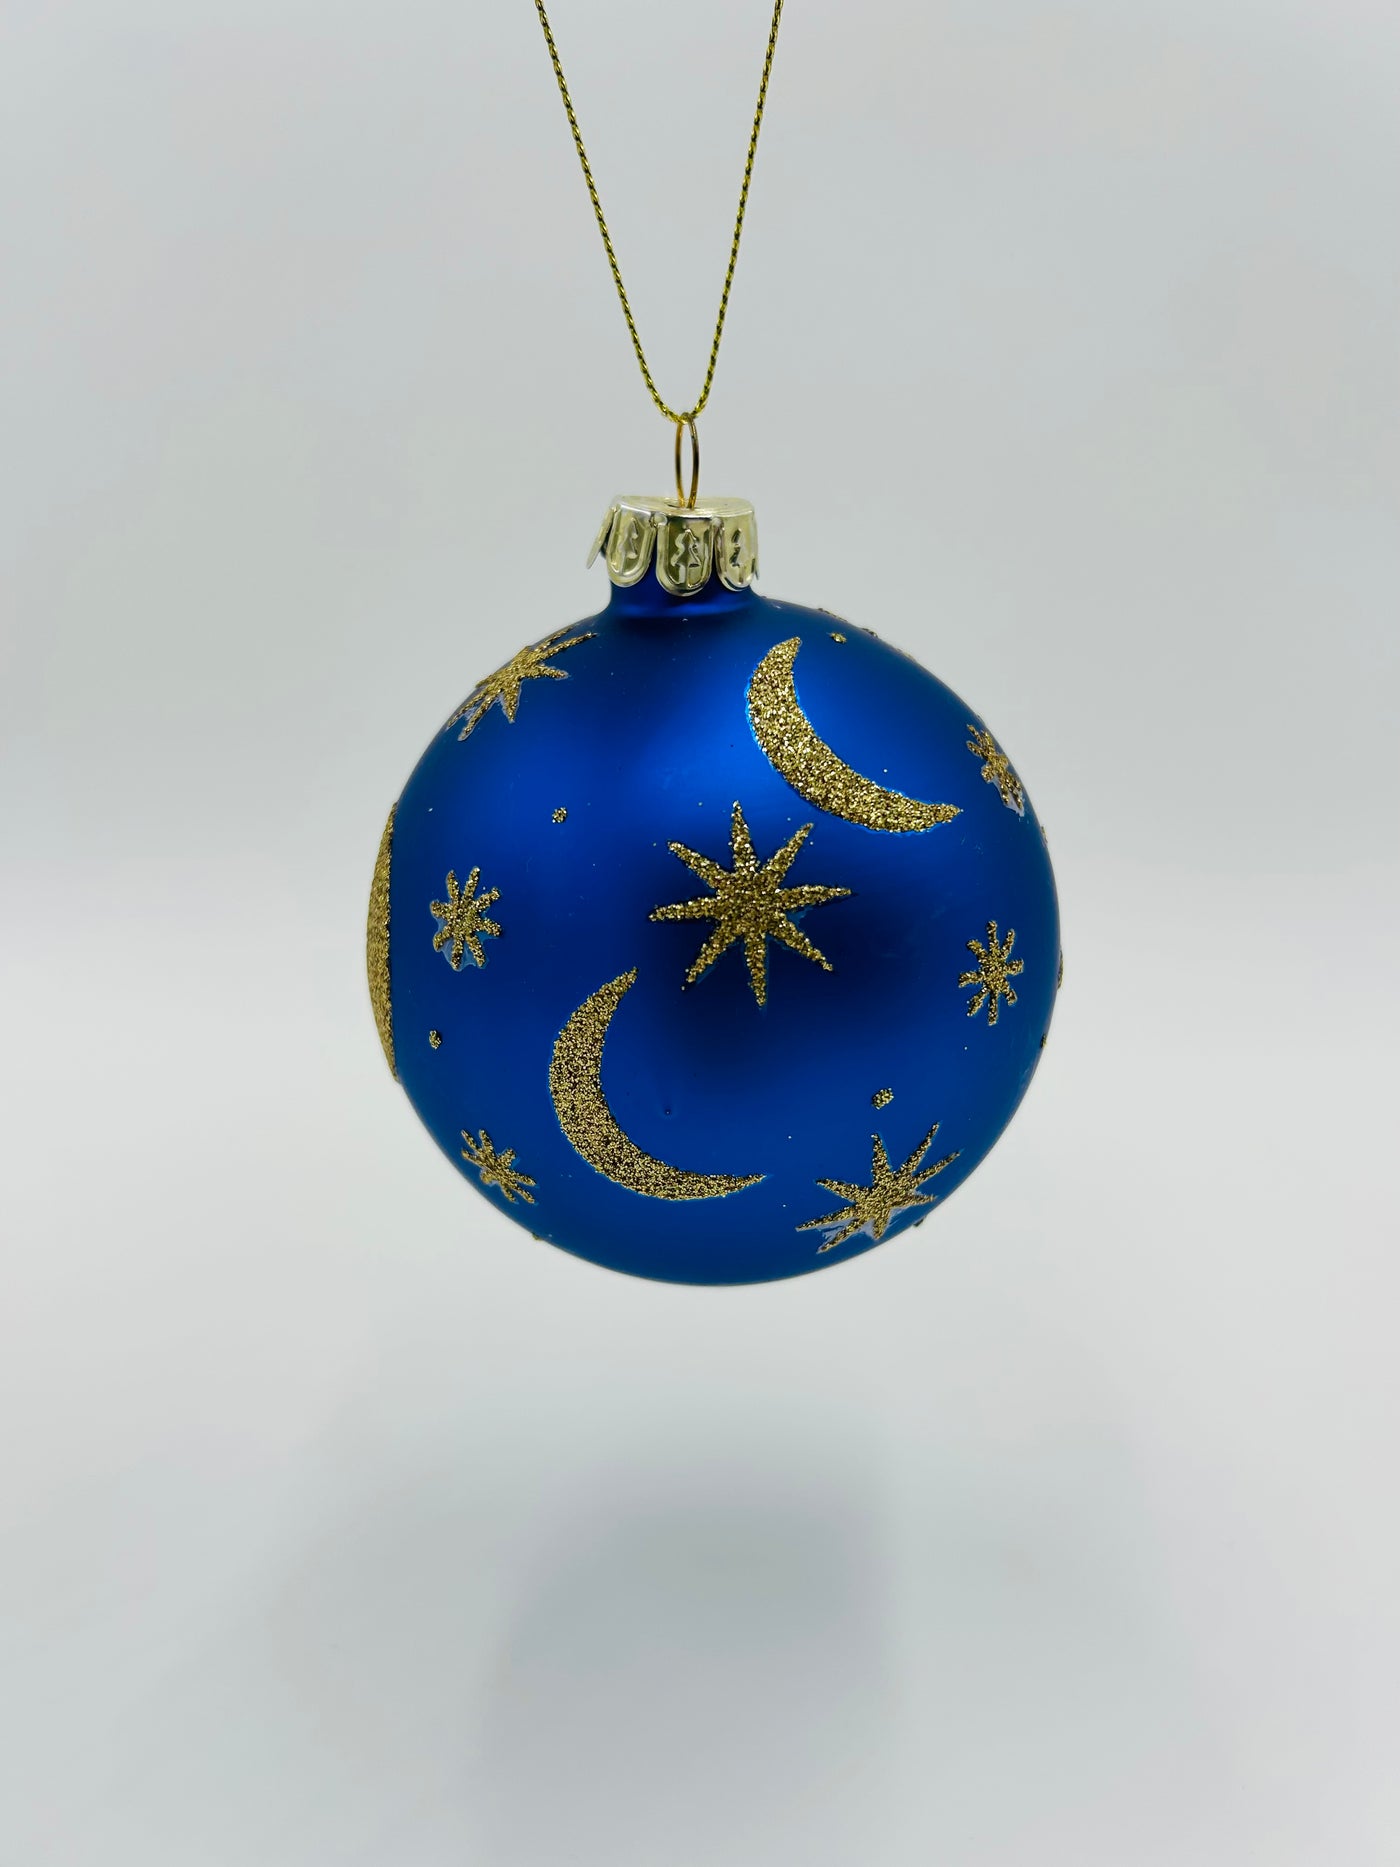 Moon & Star Ball Ornament